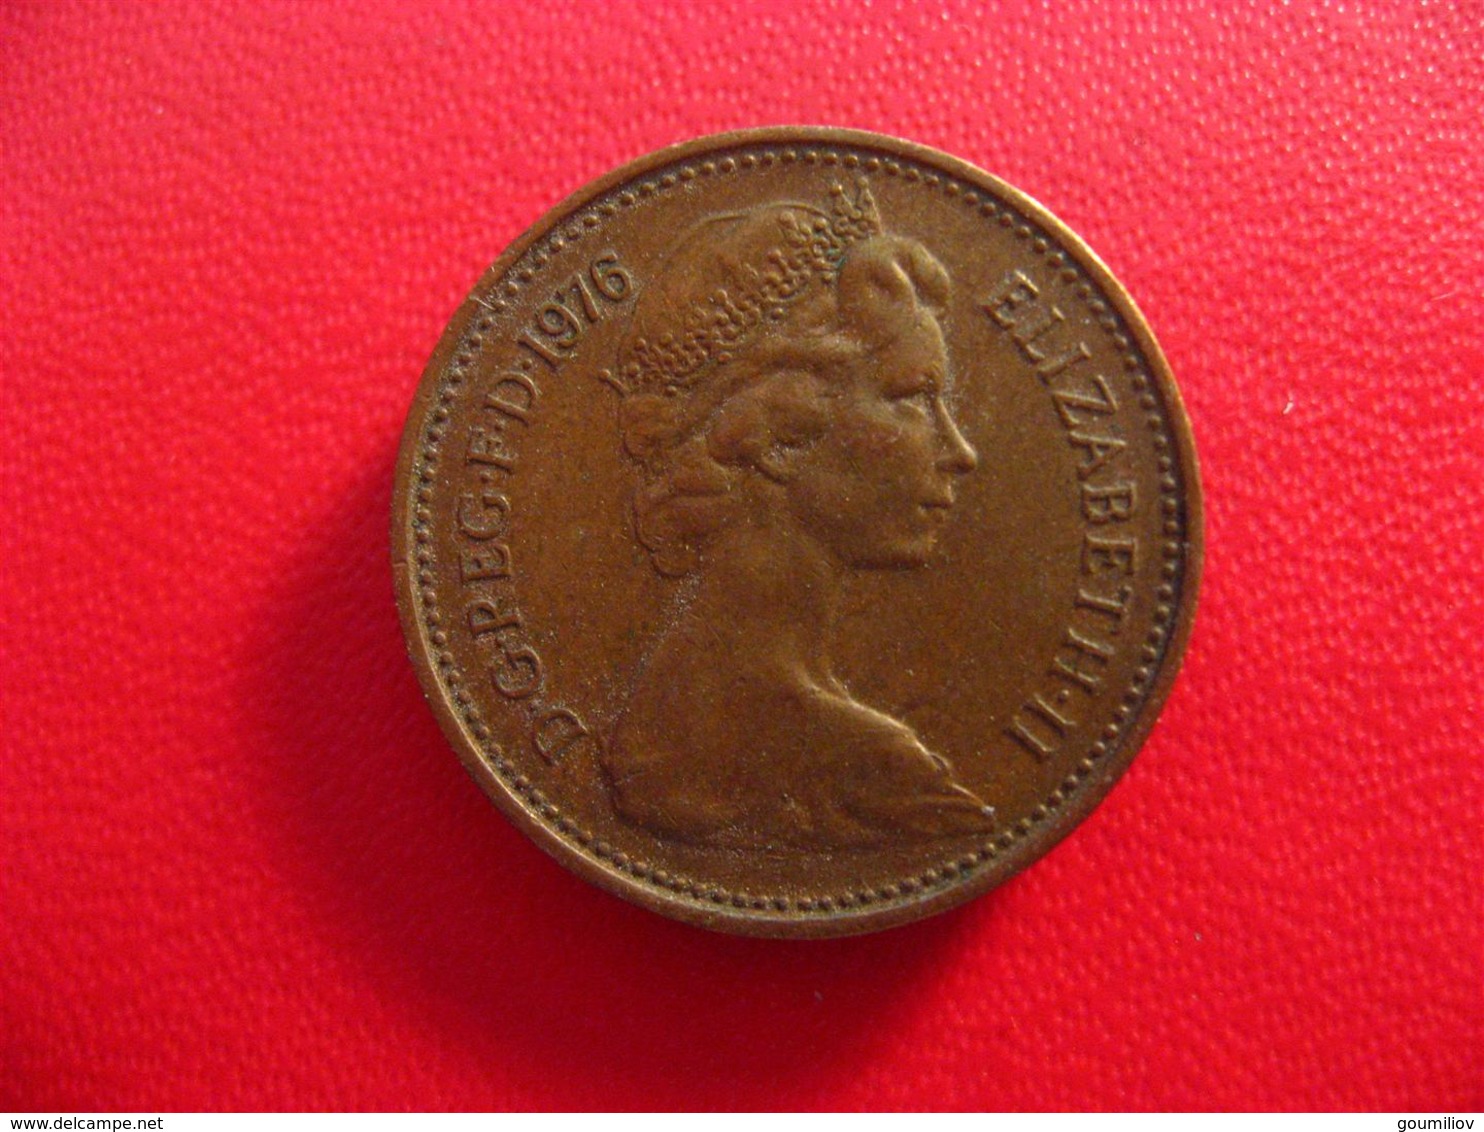 Royaume-Uni - UK - Penny 1976 7554 - 1 Penny & 1 New Penny